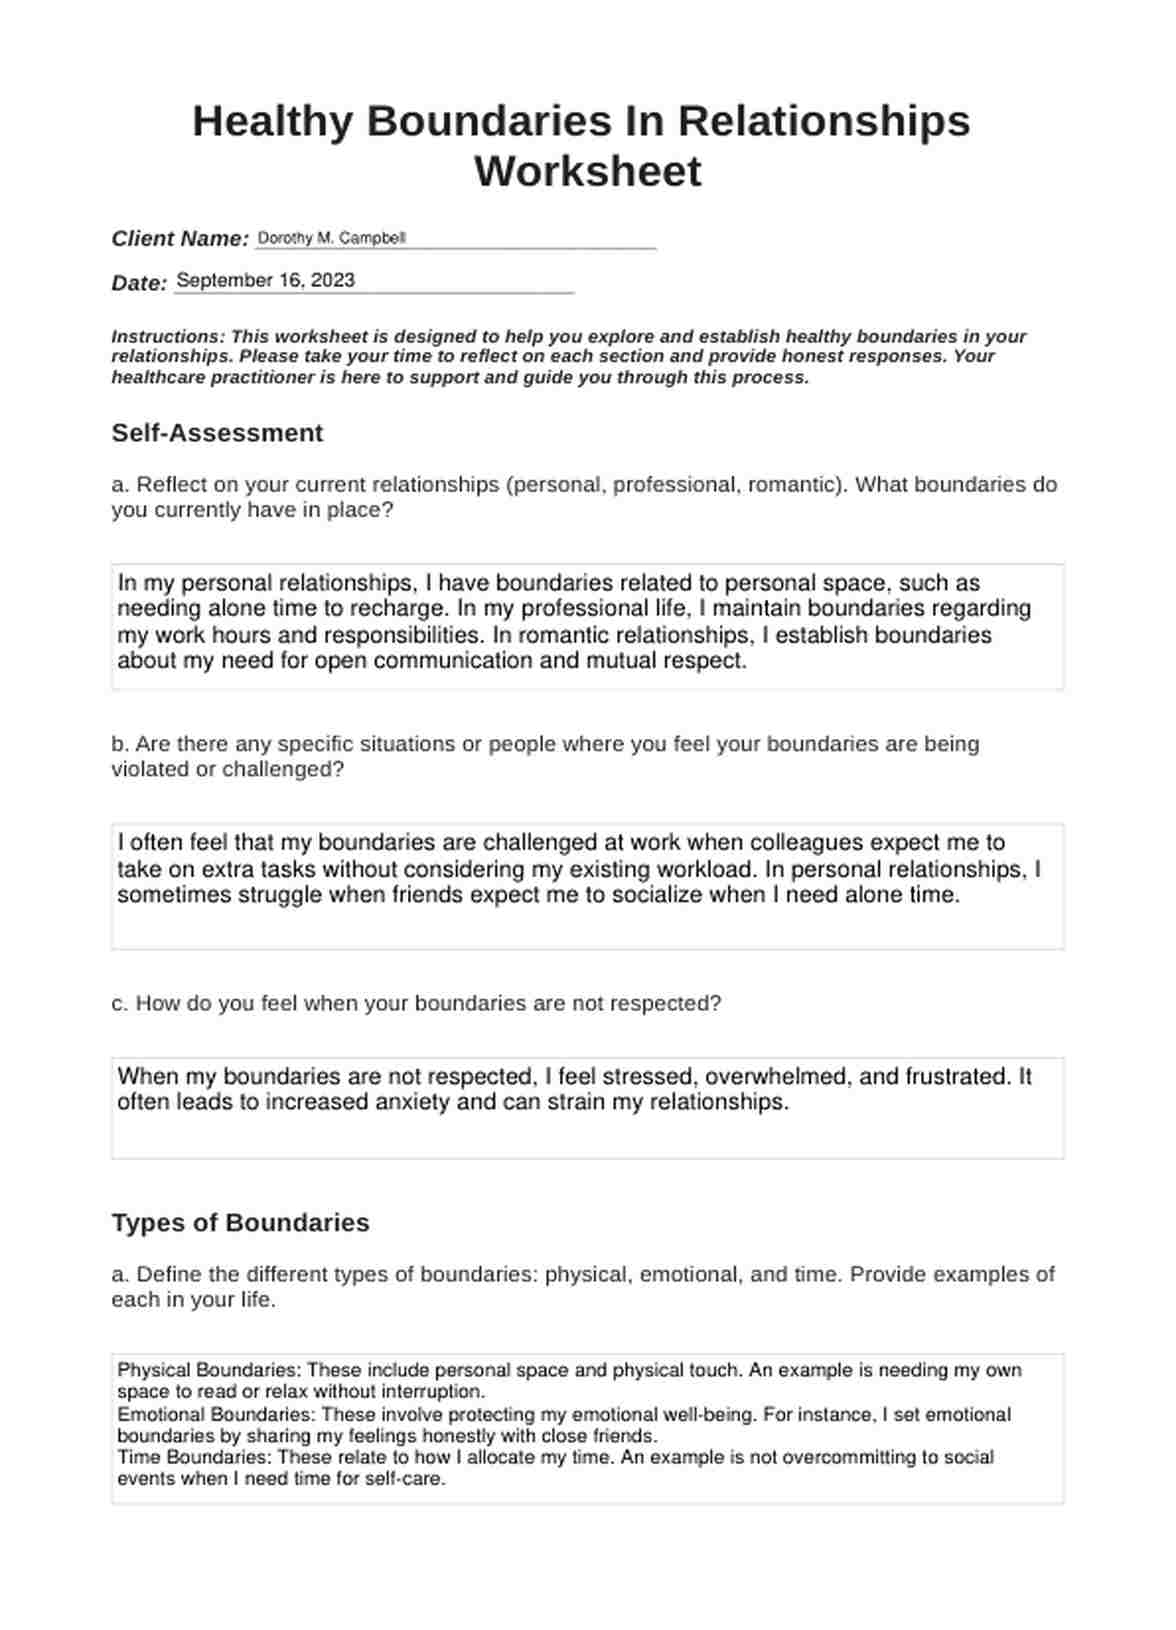 Healthy Boundaries In Relationships Worksheets PDF Example